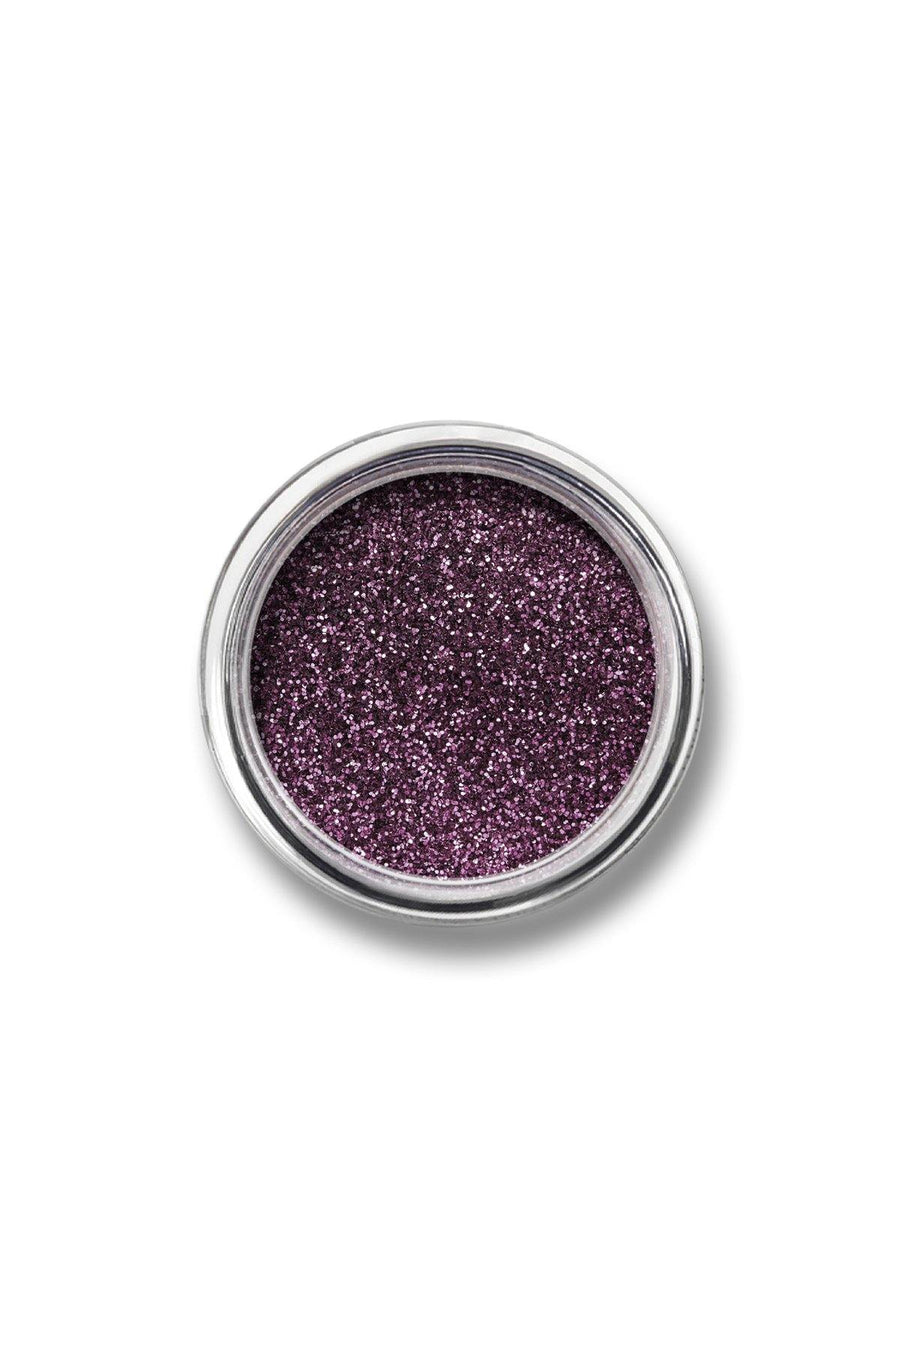 Glitter Powder #18 - Deep Rose Purple - Blend Mineral Cosmetics